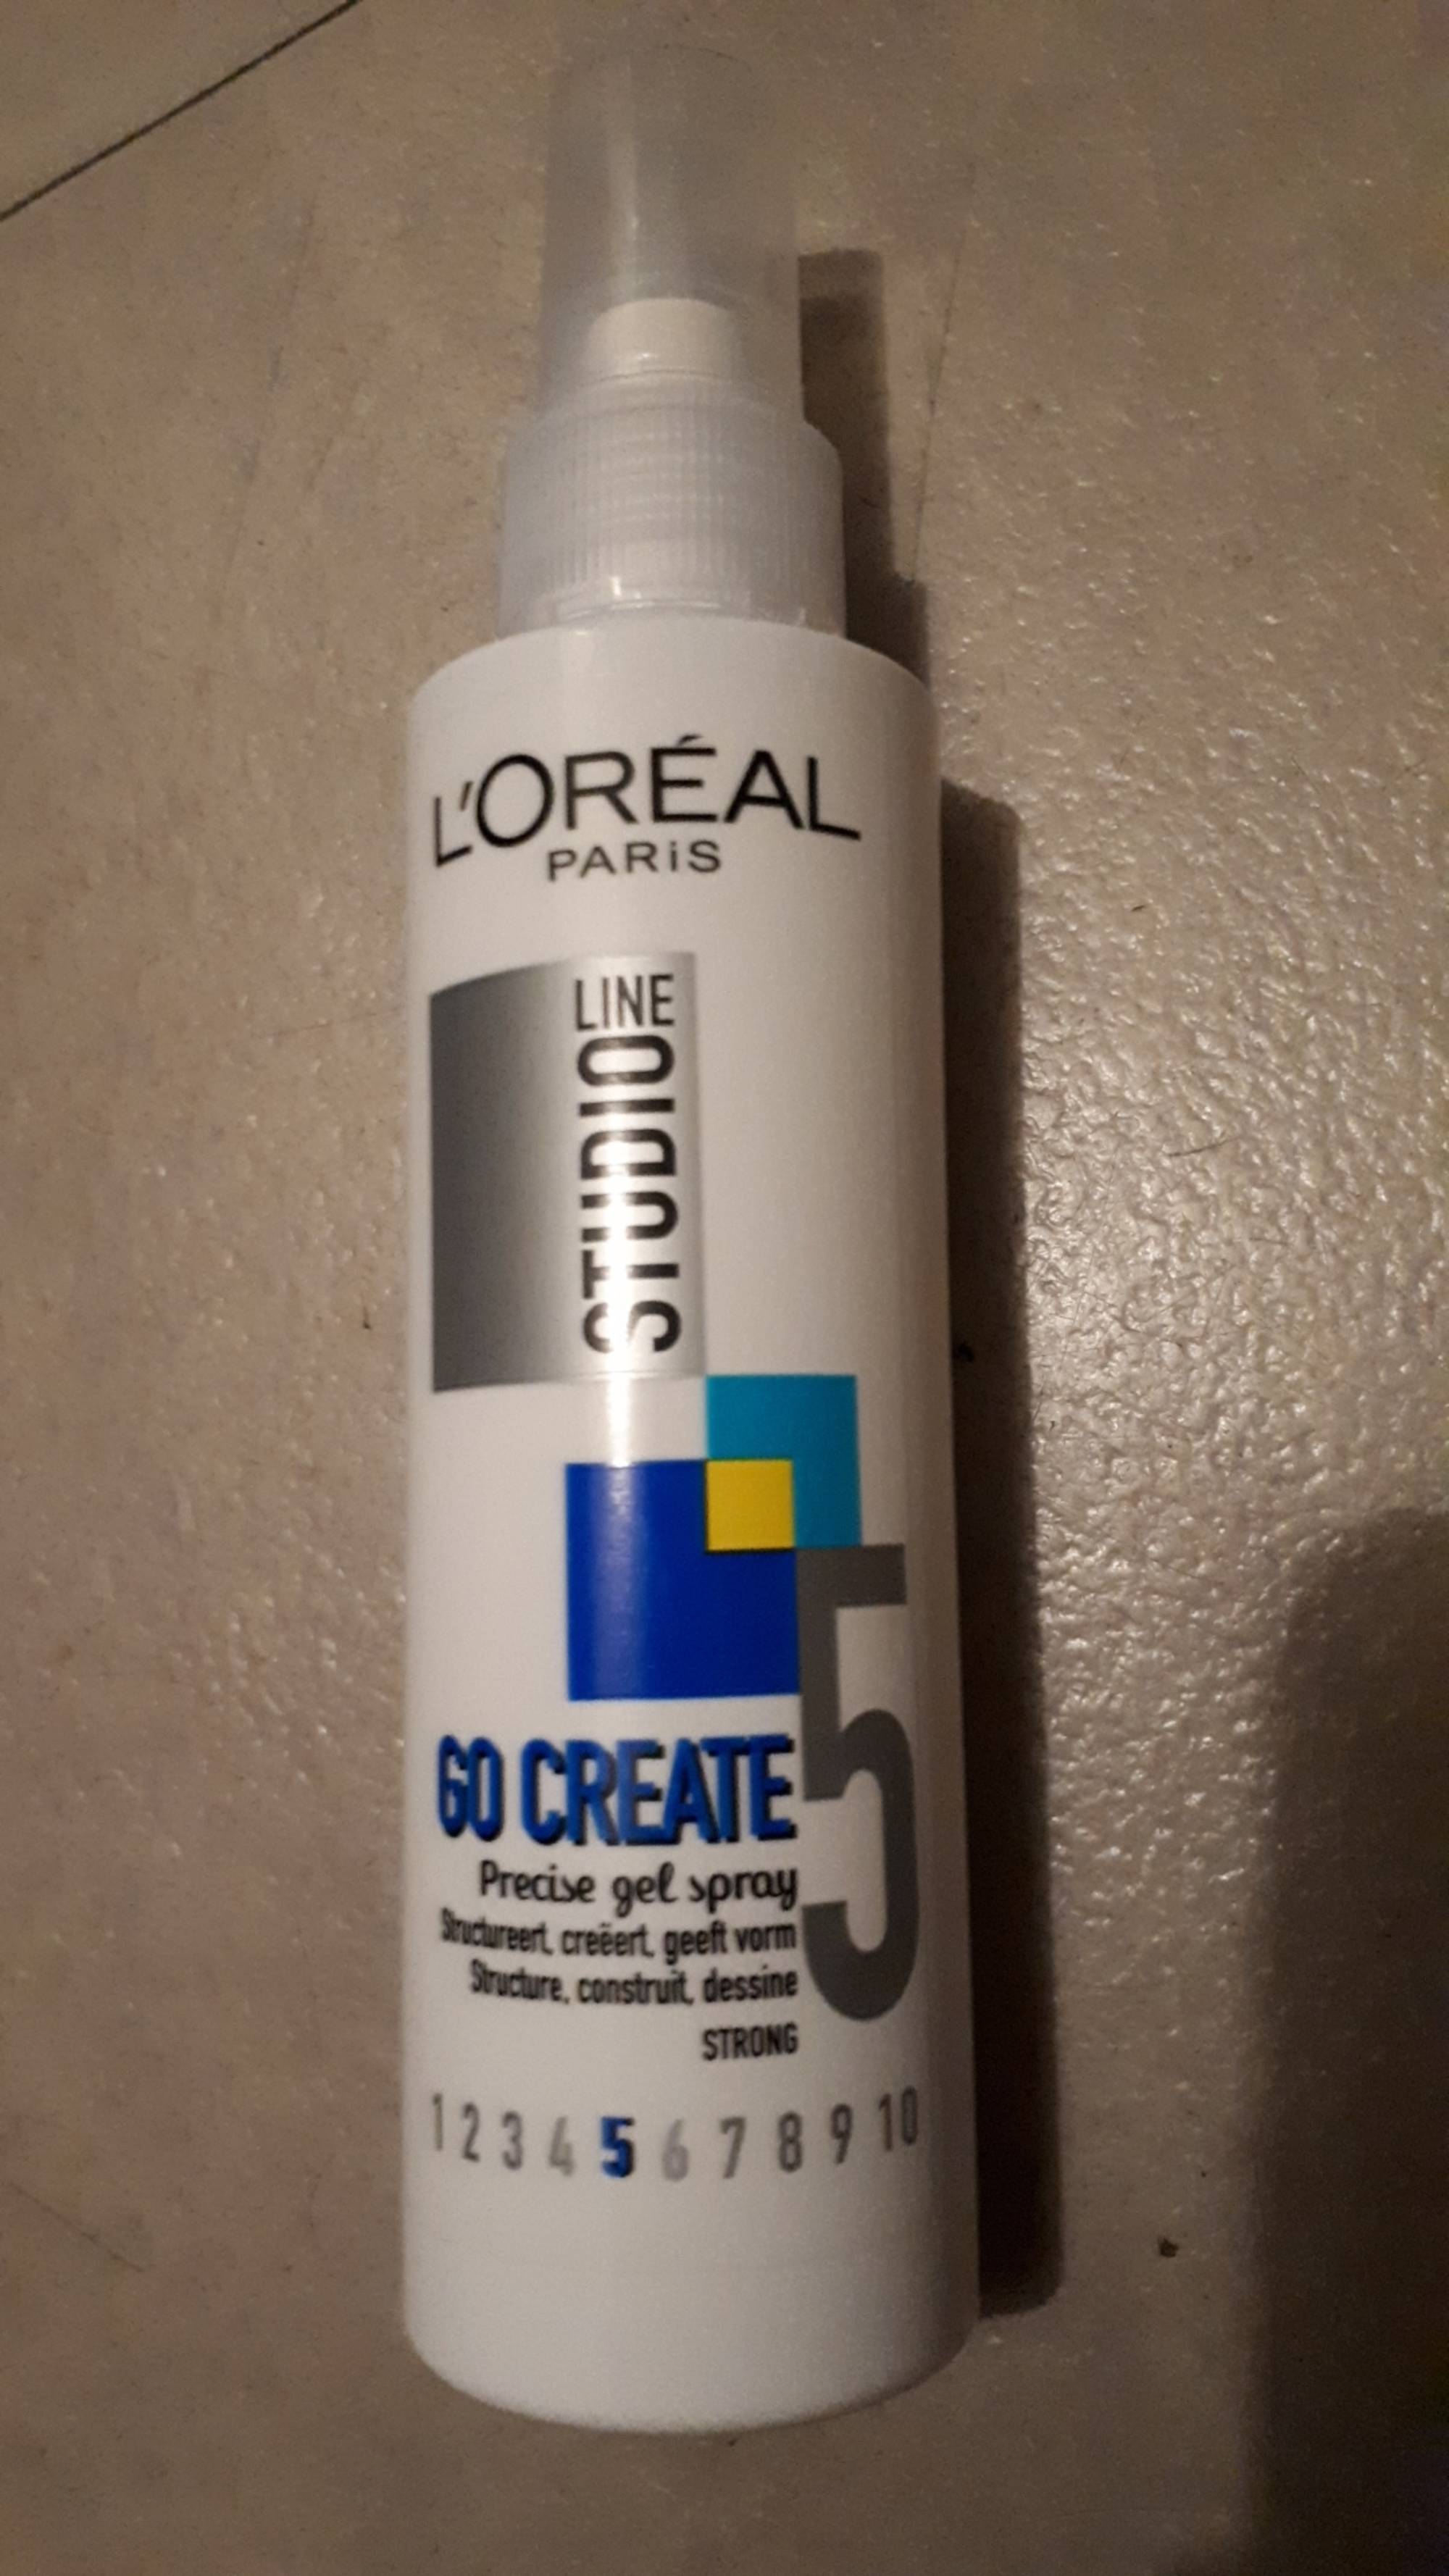 L'ORÉAL - Studio Line - Go create precise gel spray